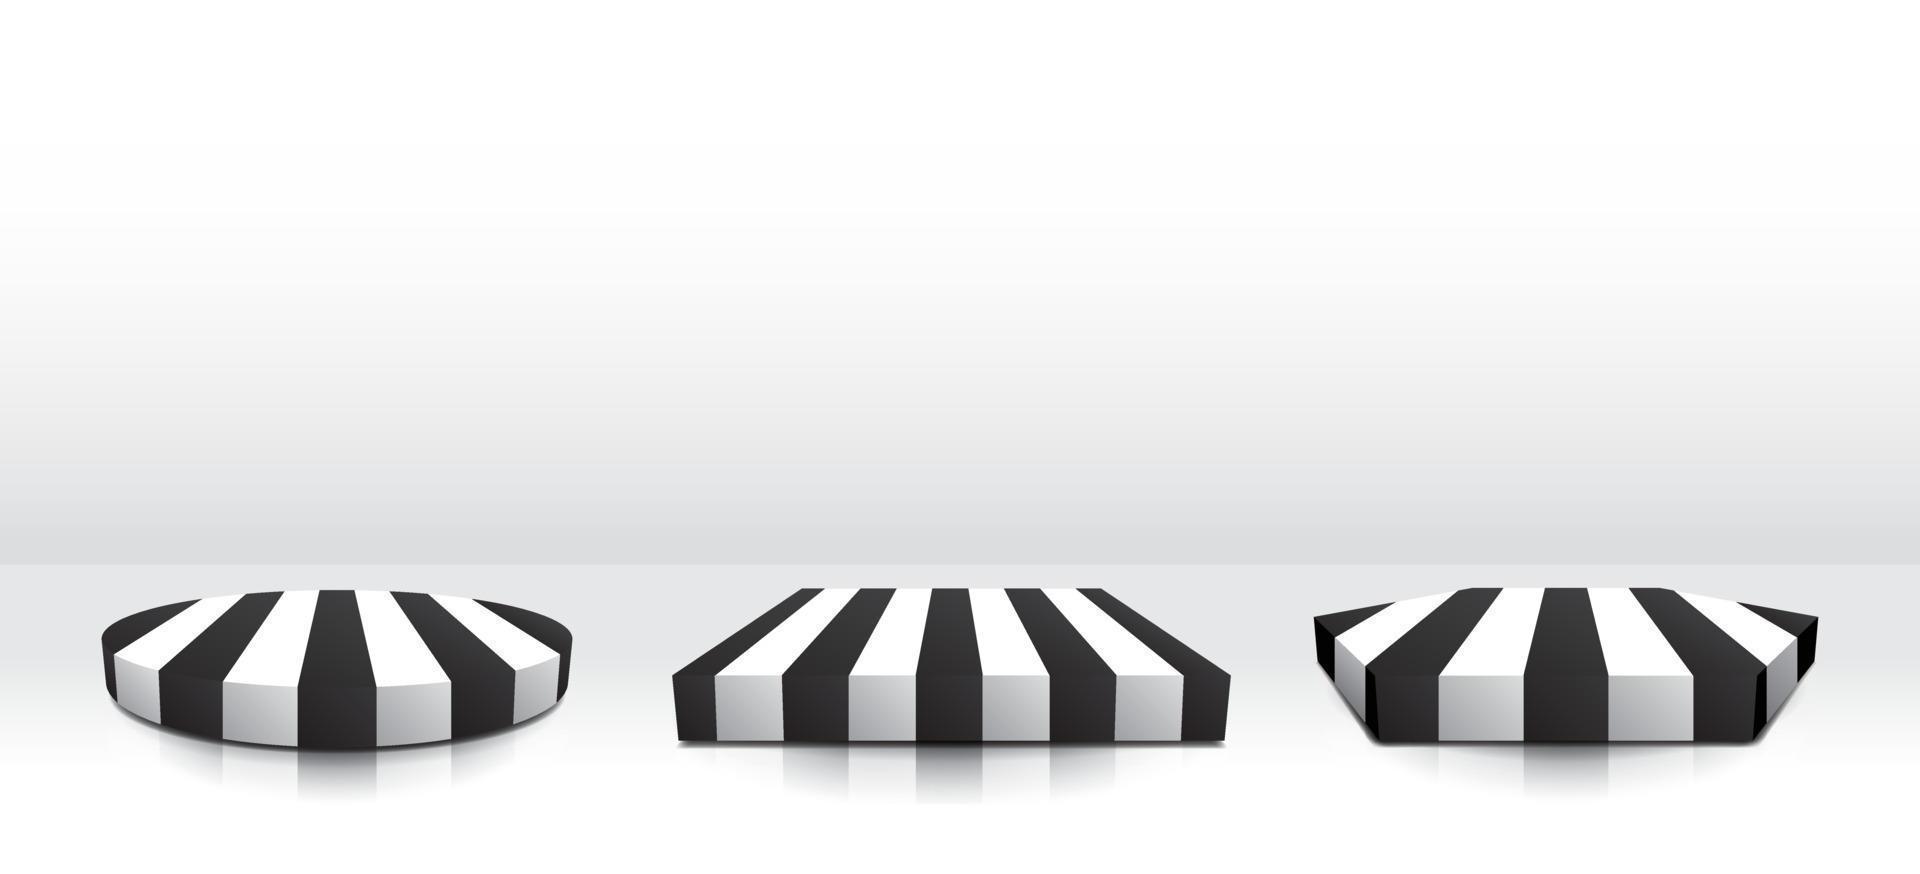 vector de ilustración 3d de pantalla de escenario a rayas en blanco y negro para modelo de moda o producto de moda.